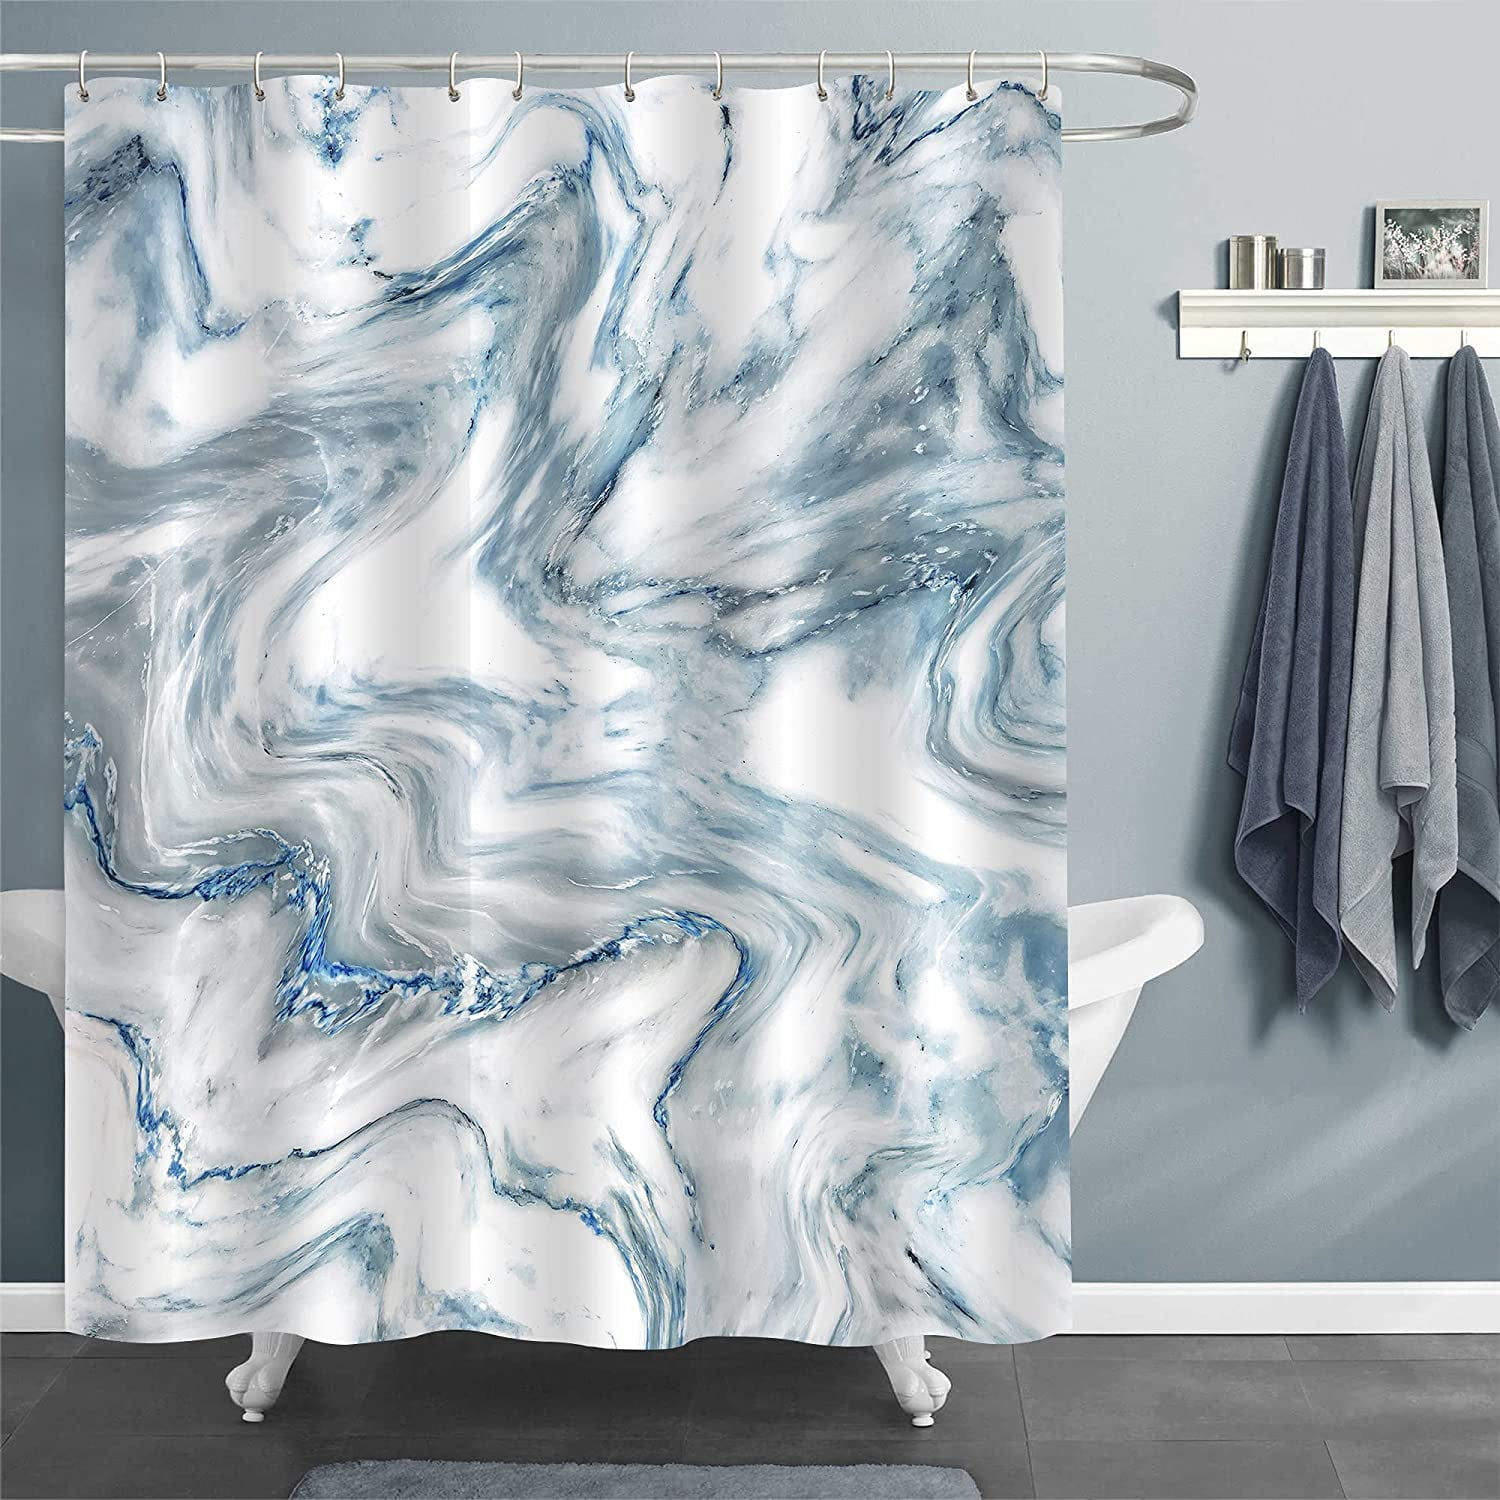 Stylish Bathroom Shower Curtain Football 178 cm x 183 cm 